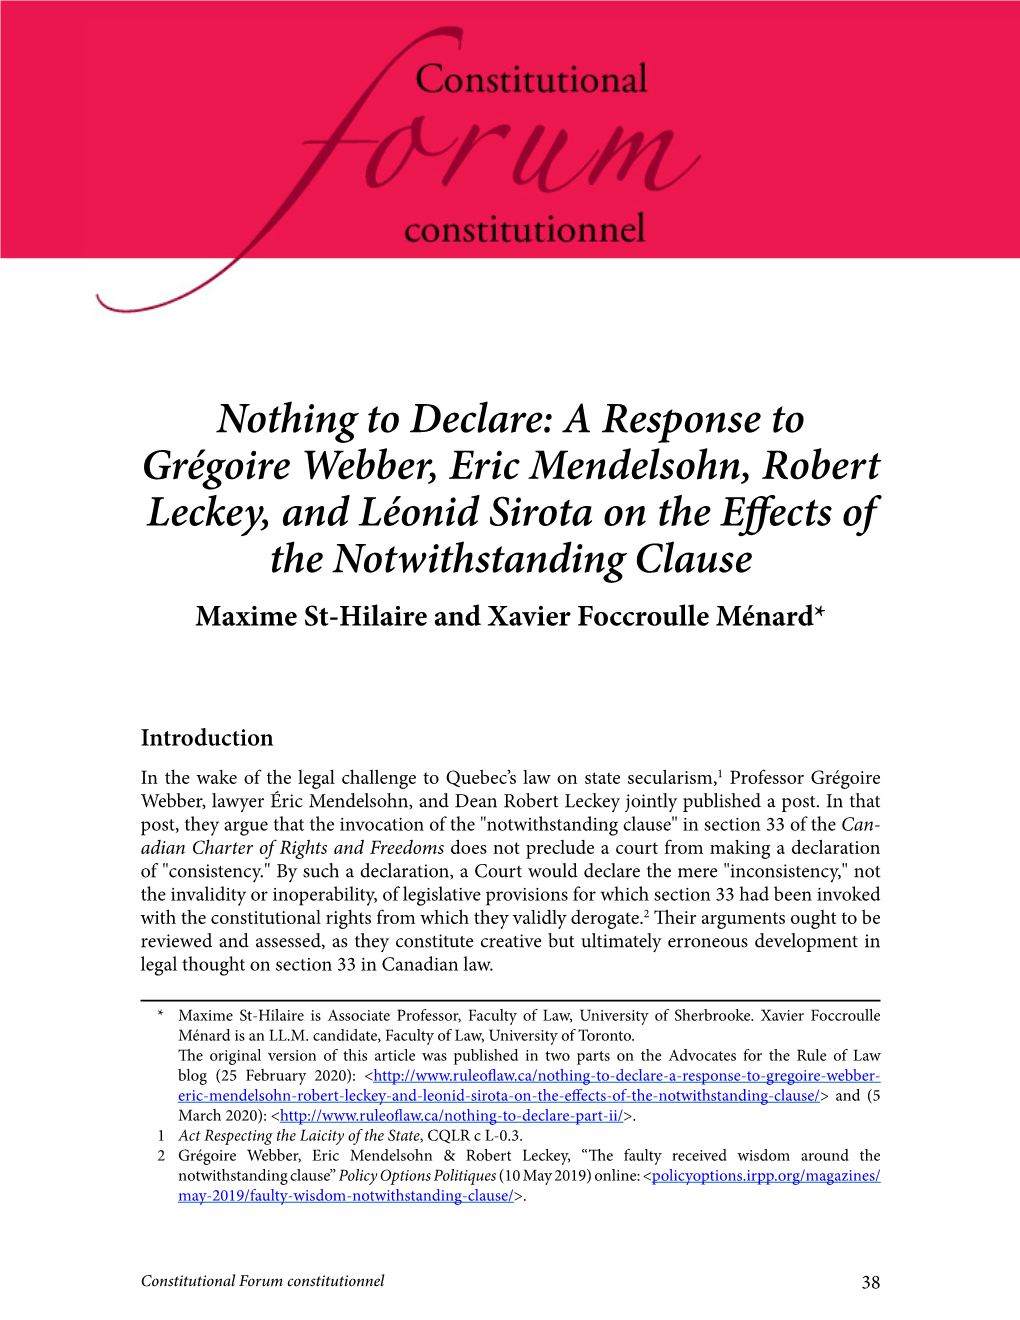 A Response to Grégoire Webber, Eric Mendelsohn, Robert Leckey, And